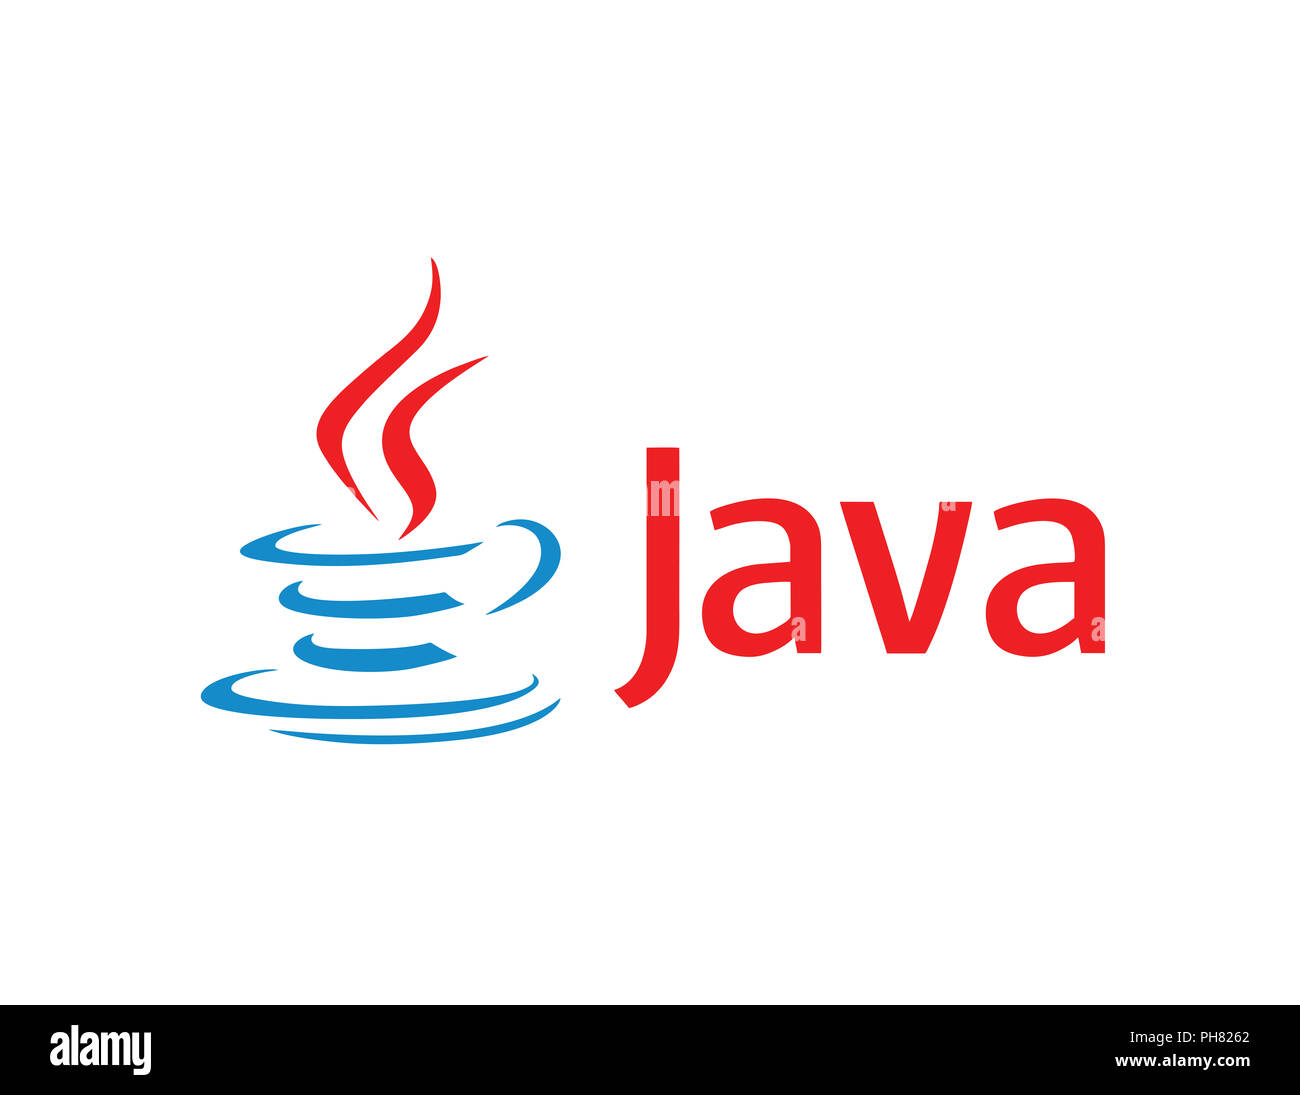 java logo illustration programming technology Stock Photo